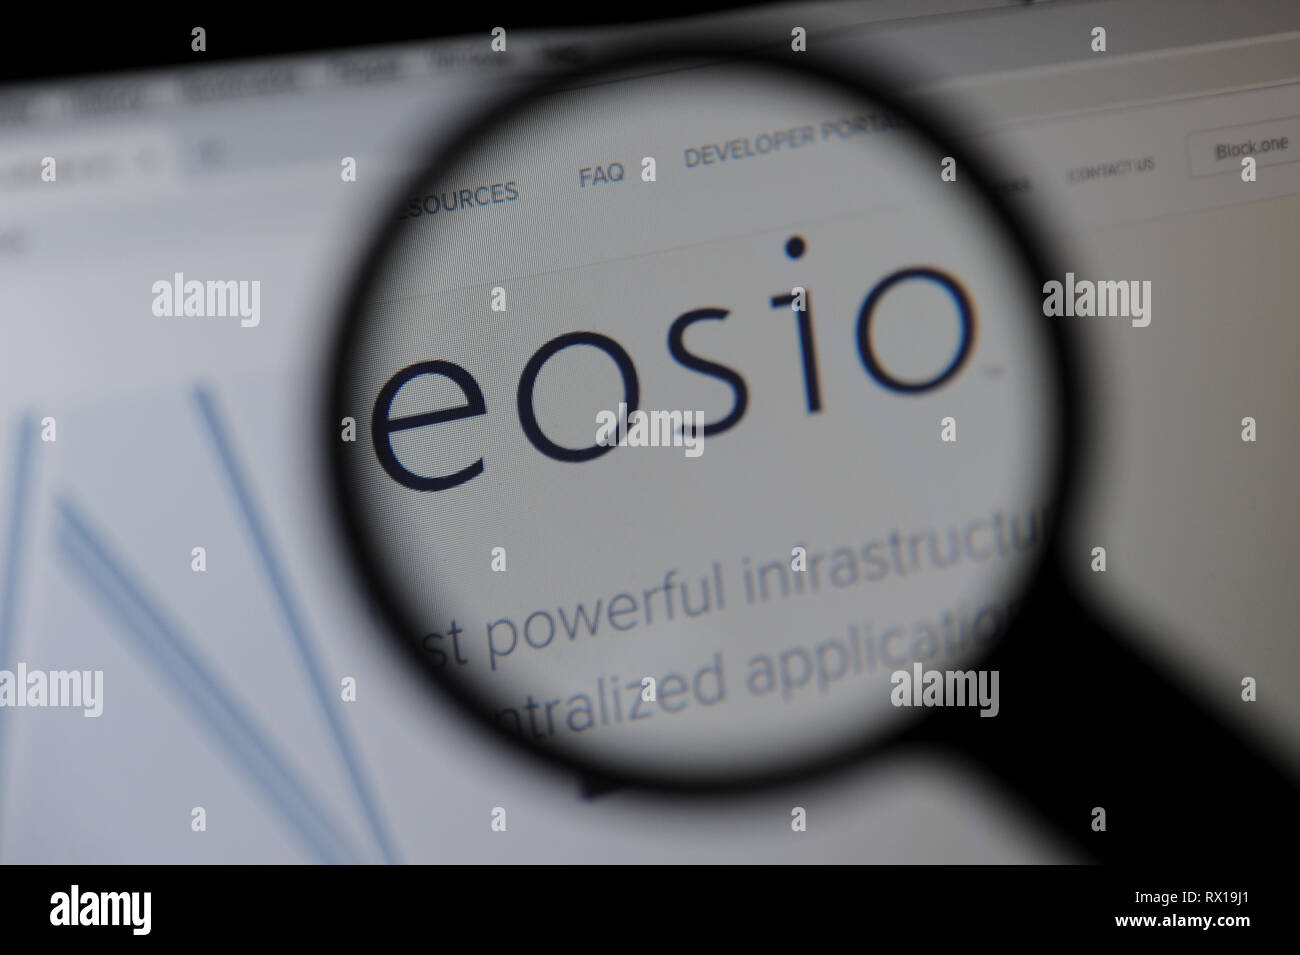 The EOSIO website seen through a magnifying glass Stock Photo